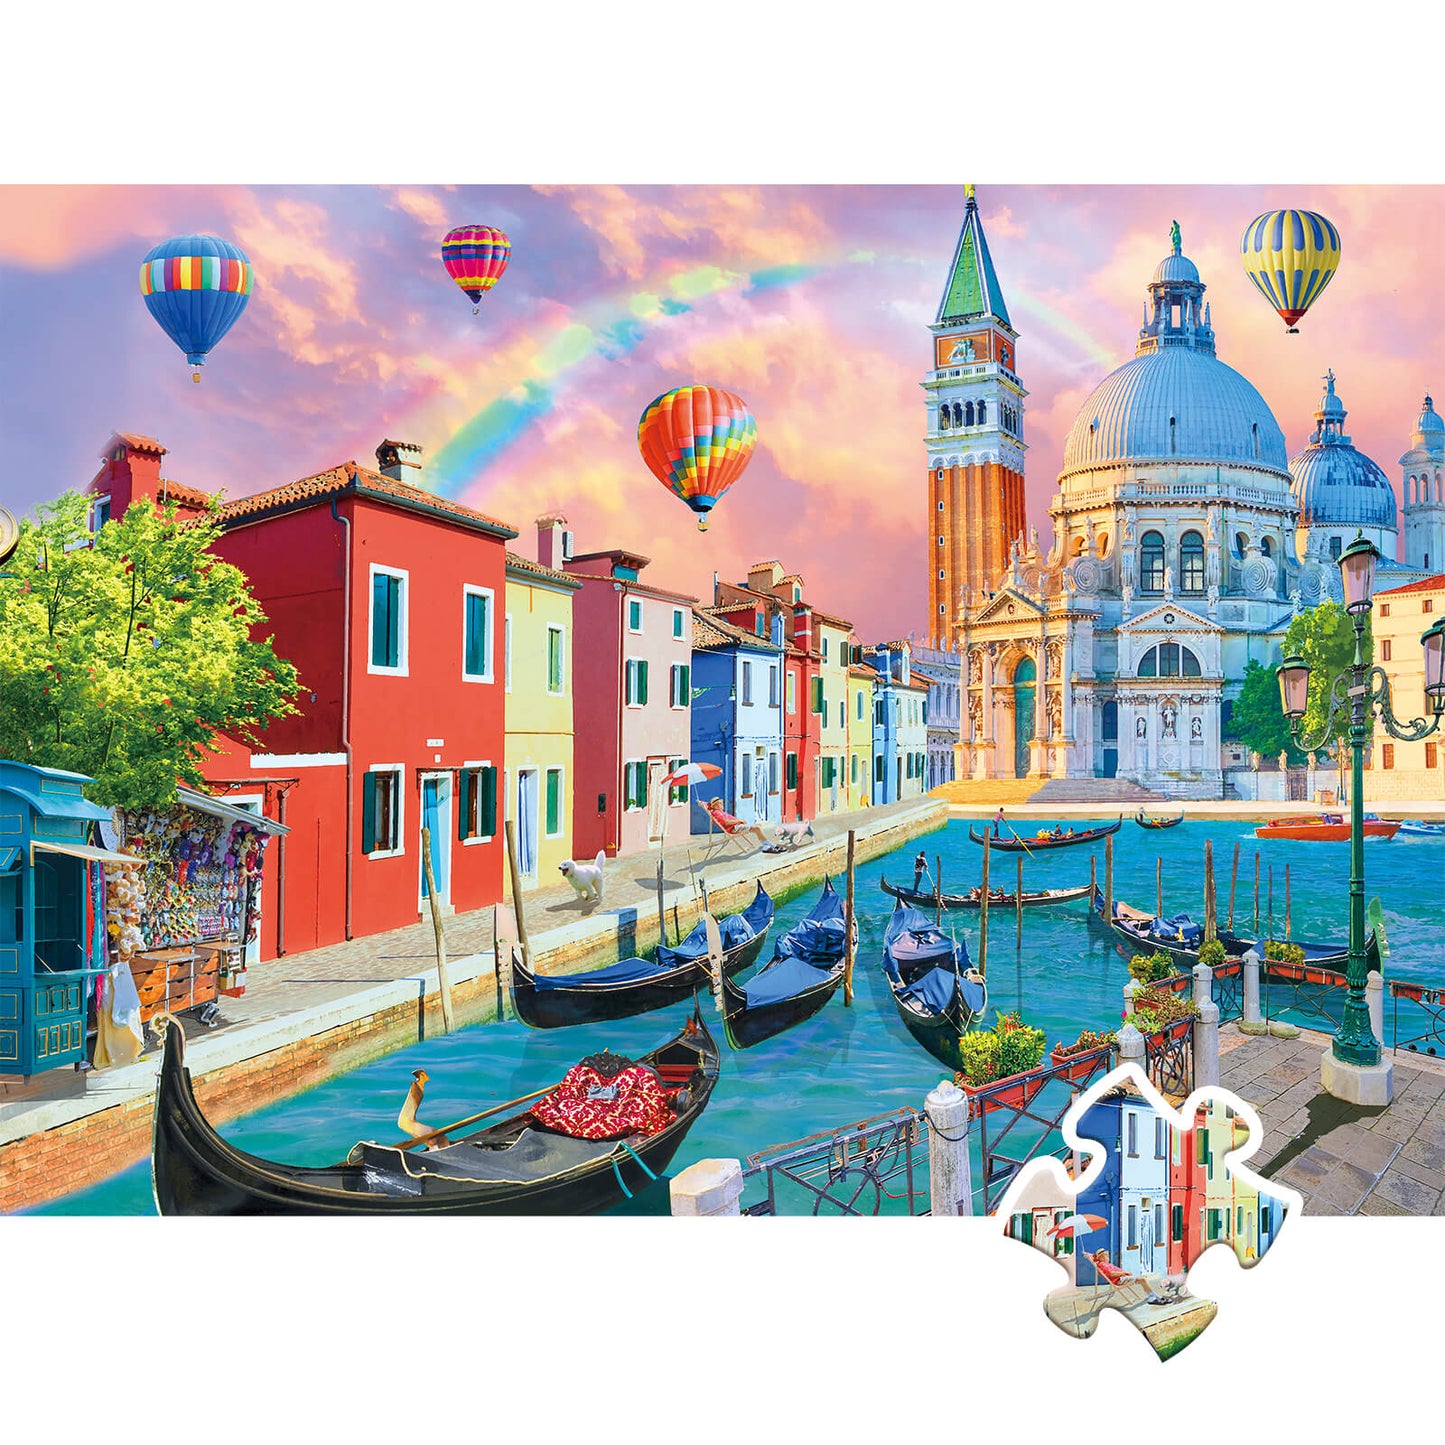 Venice Jigsaw Puzzles